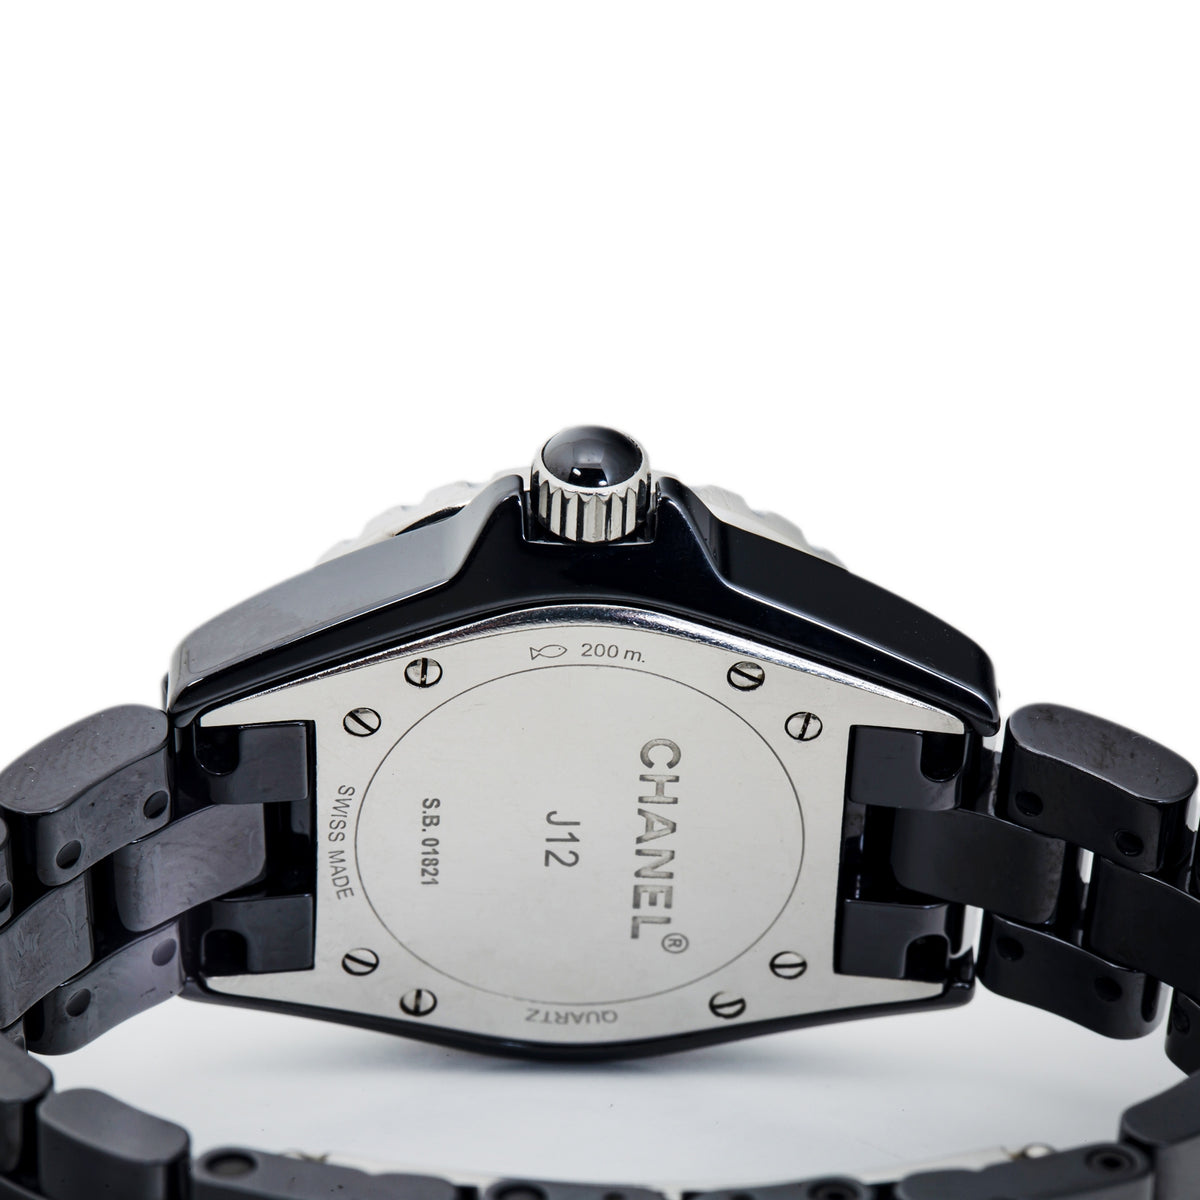 Chanel J12 H2427 Ceramic Black Diamonds Dial Quartz Ladies Watch 38mm